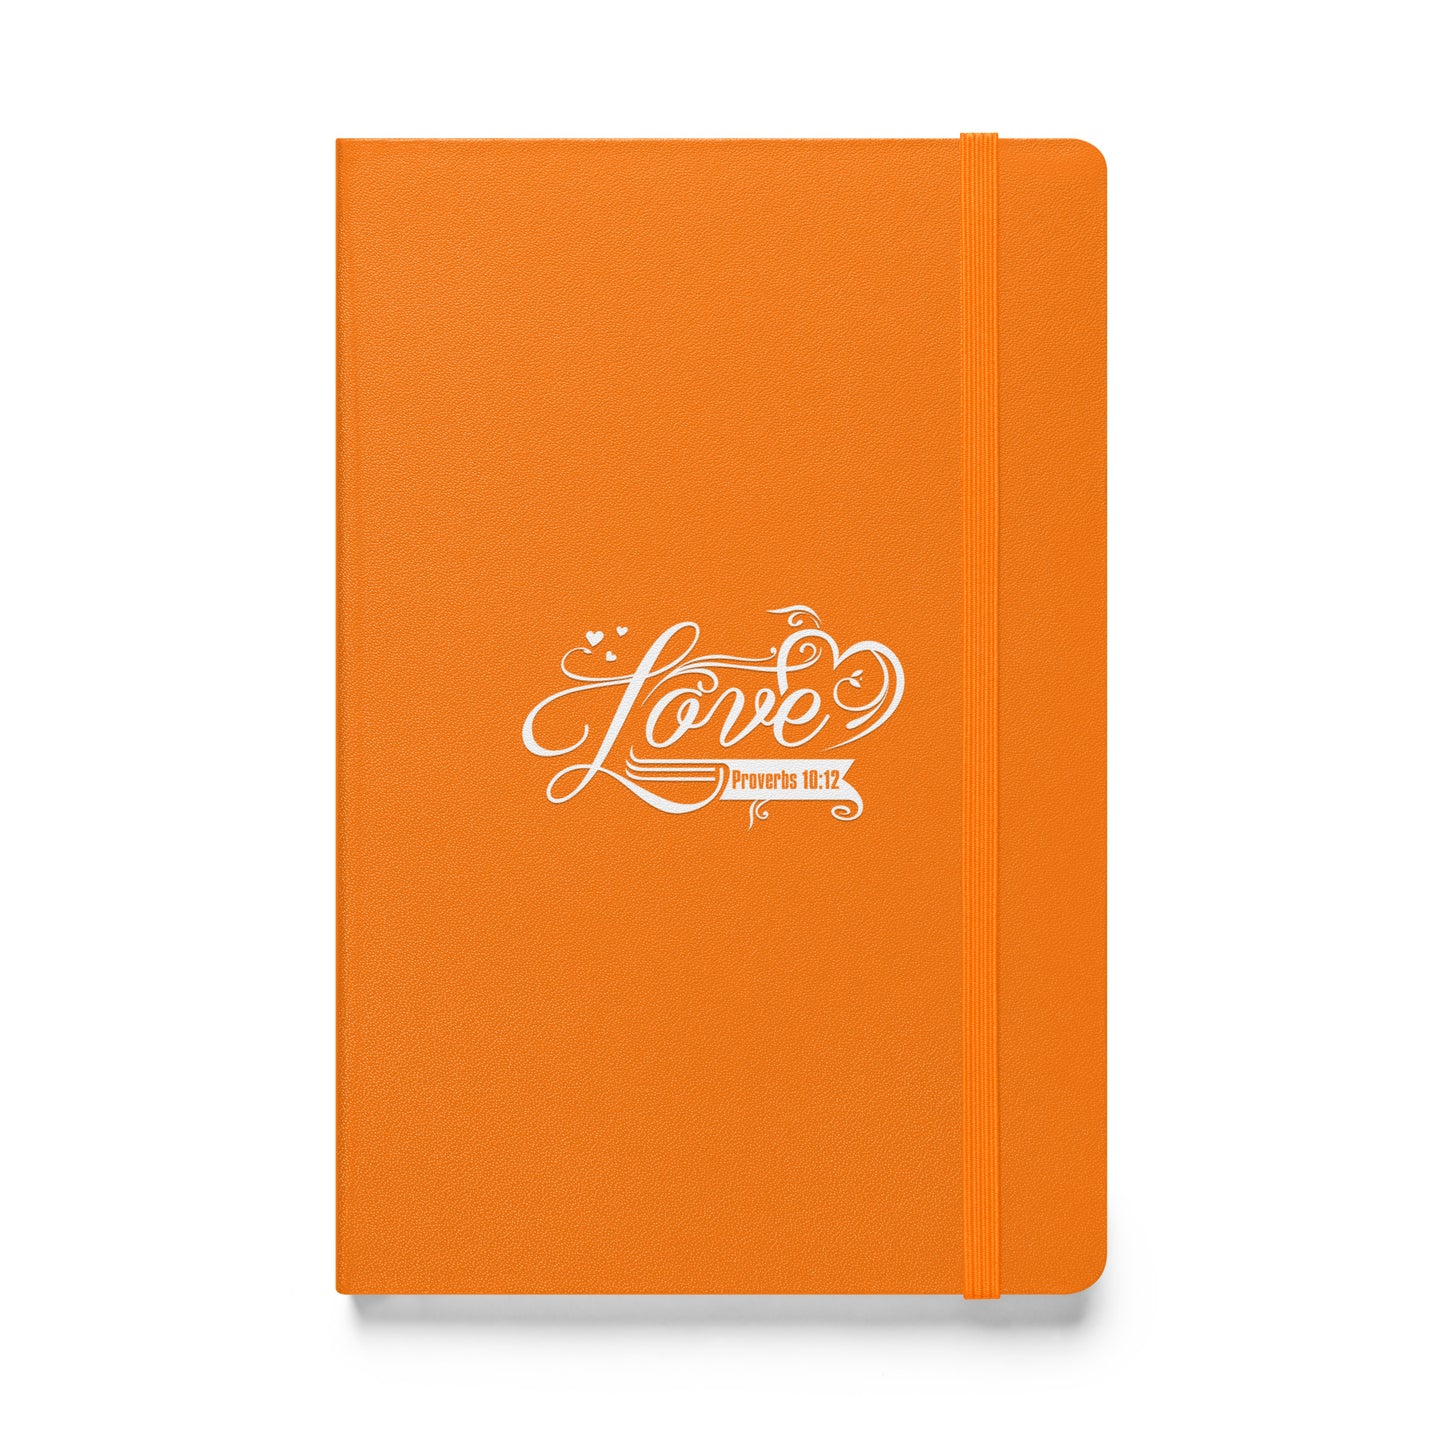 Love - Hardcover bound notebook